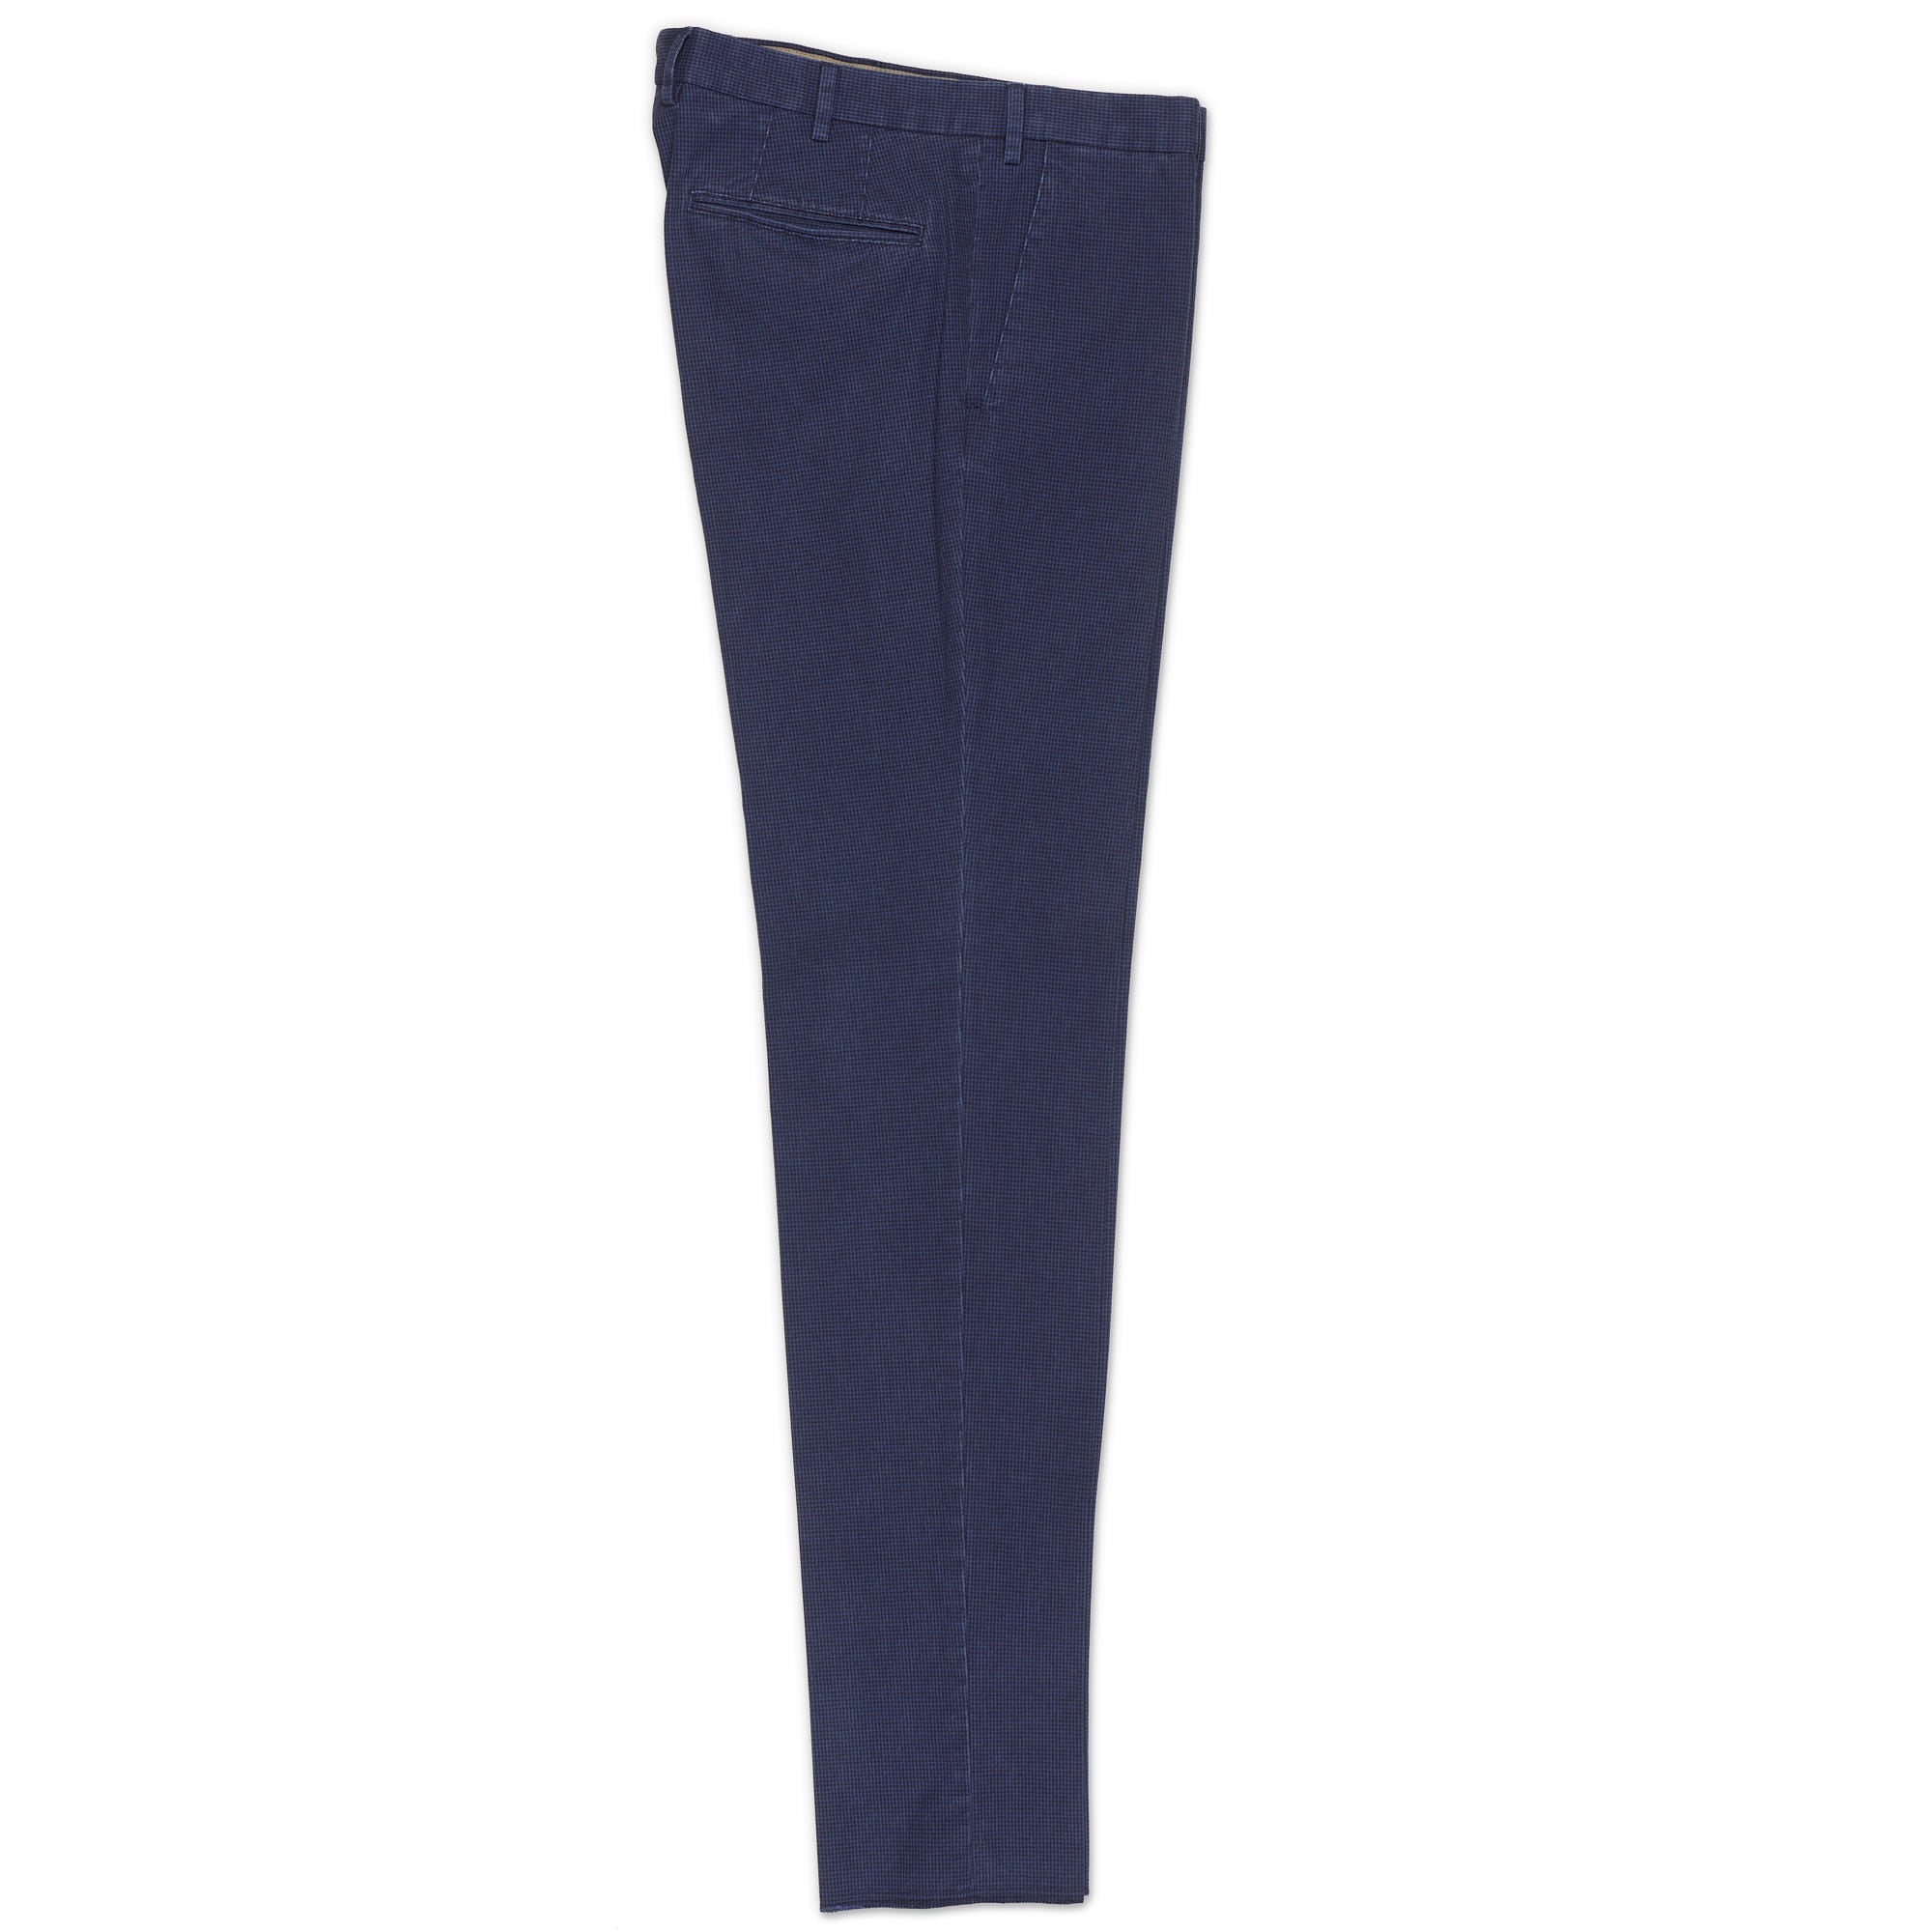 INCOTEX (Slowear) Blue Shepherd Check Cotton Stretch Pants NEW Slim Fit INCOTEX